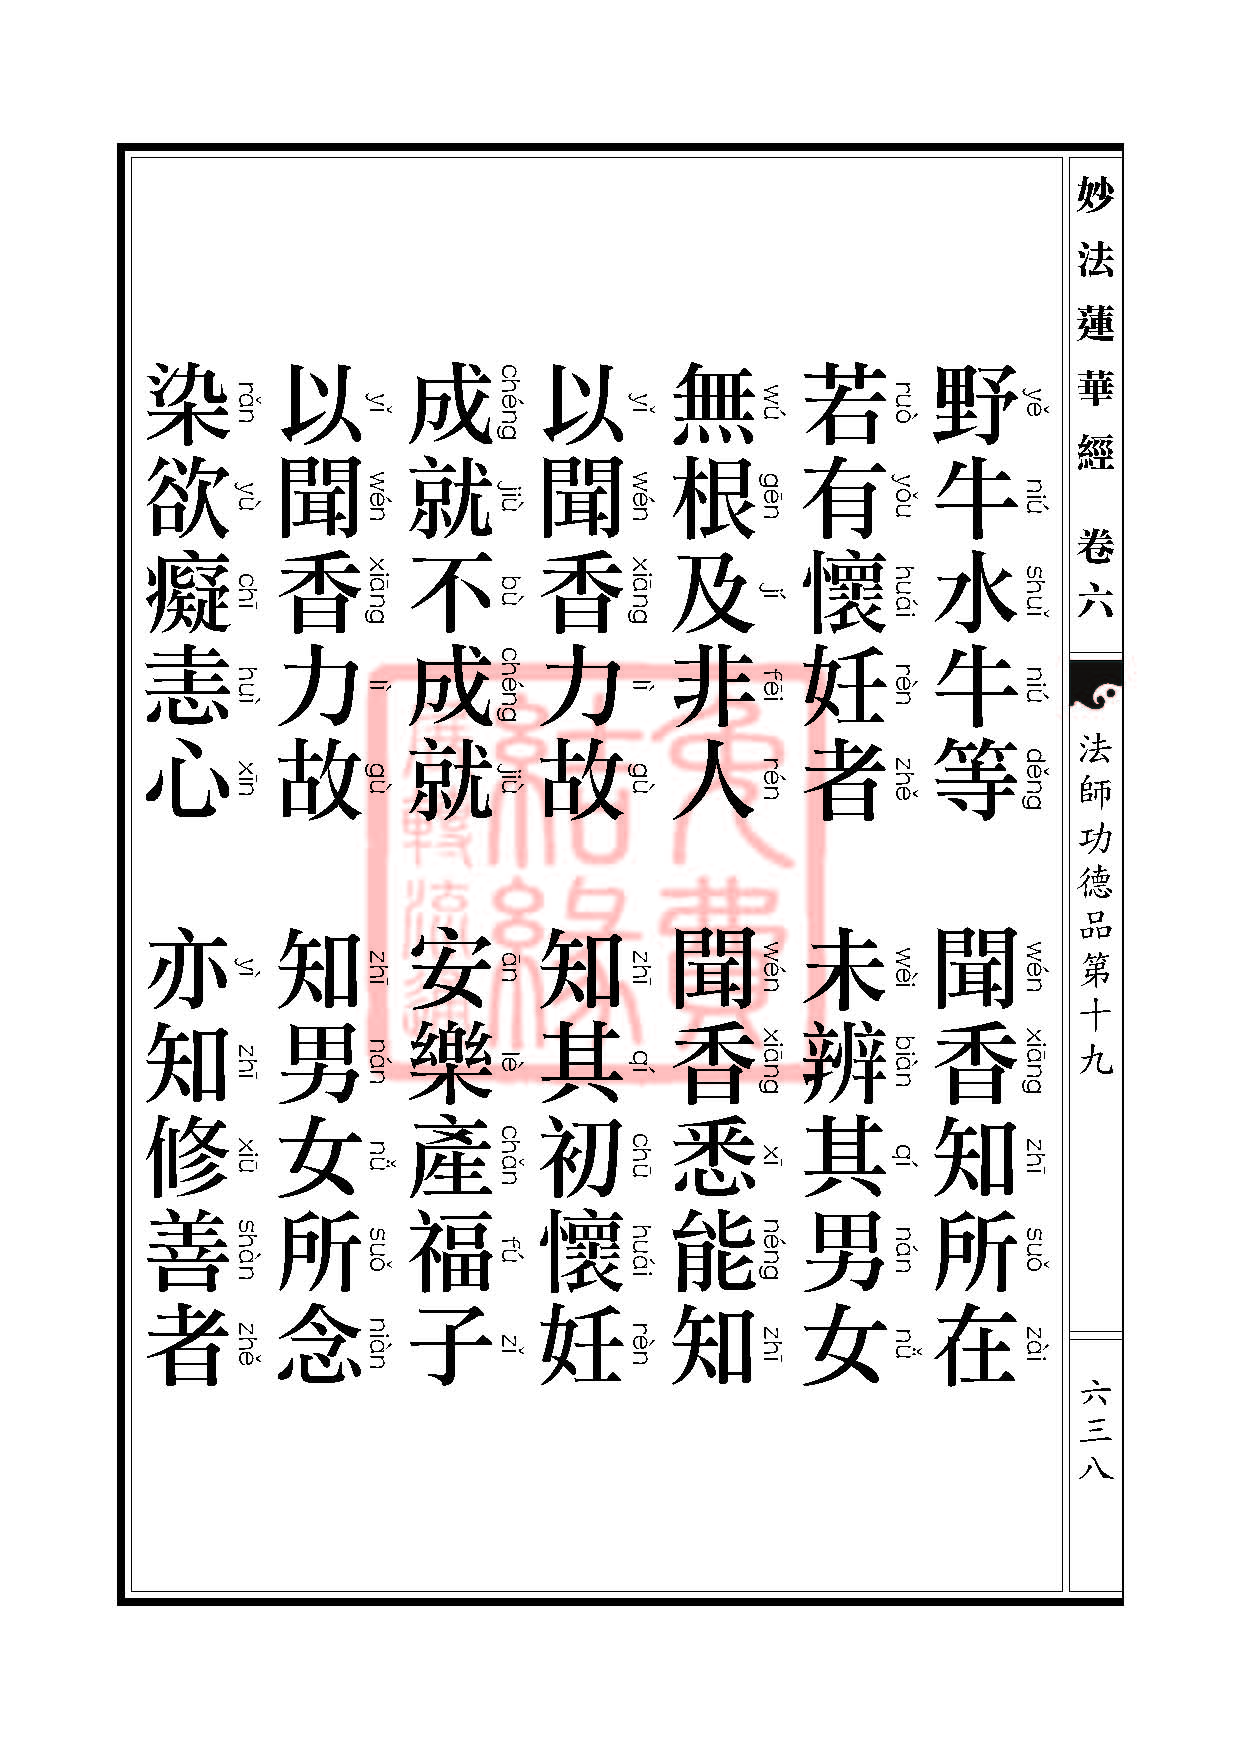 Book_FHJ_HK-A6-PY_Web__638.jpg